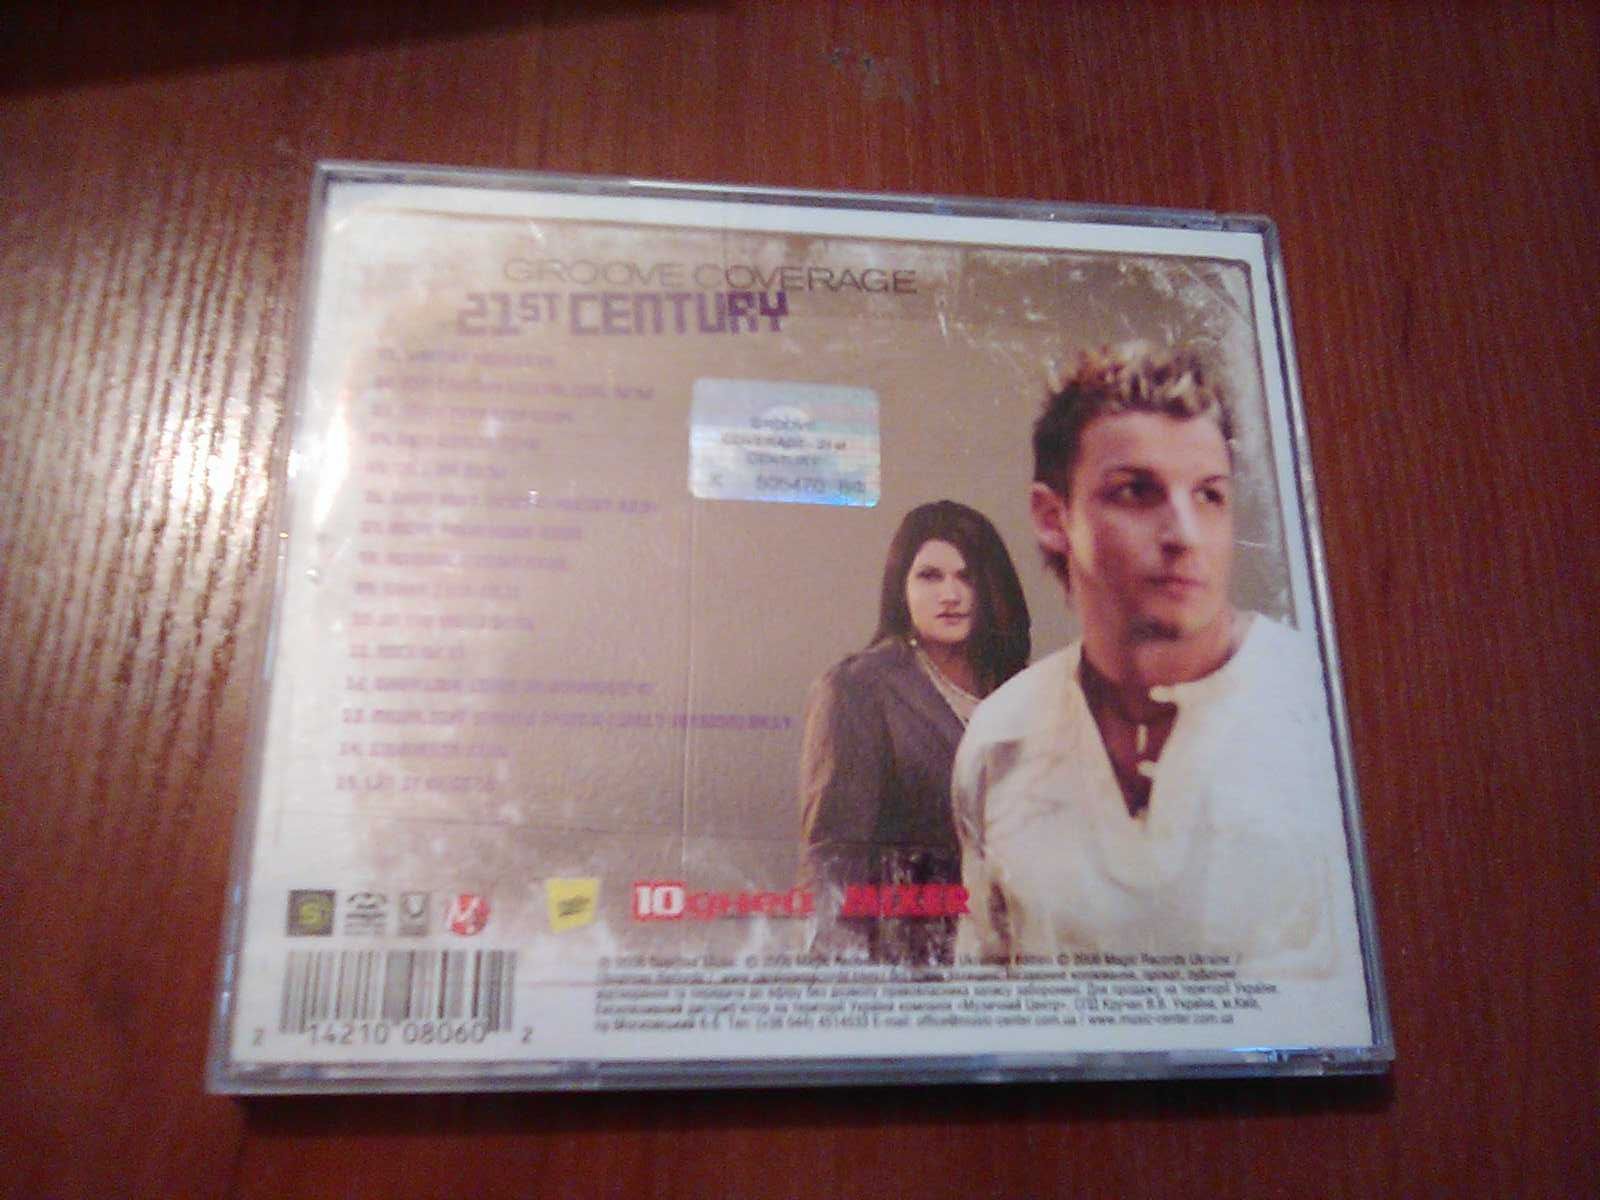 Музыкальный CD Groove Coverage альбом 21 Century 2006 год